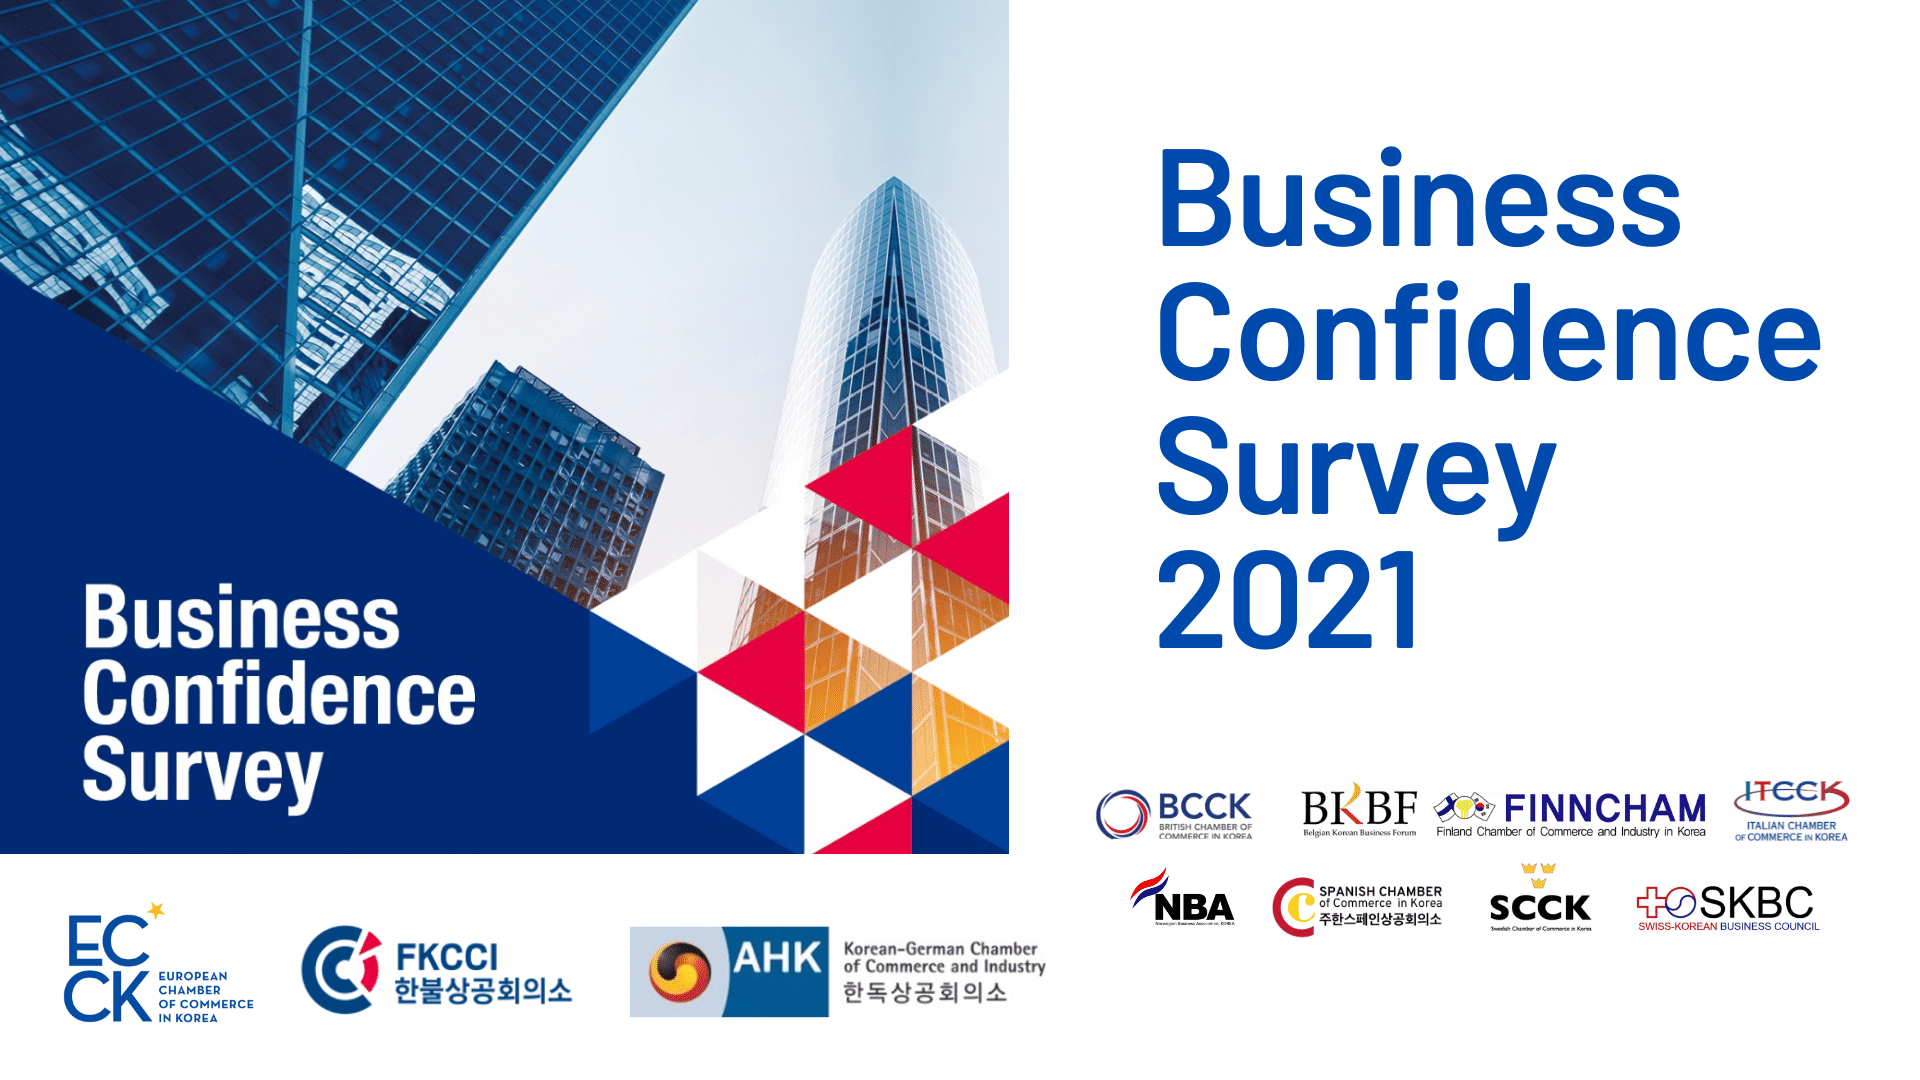 European Business Confidence Survey 2021